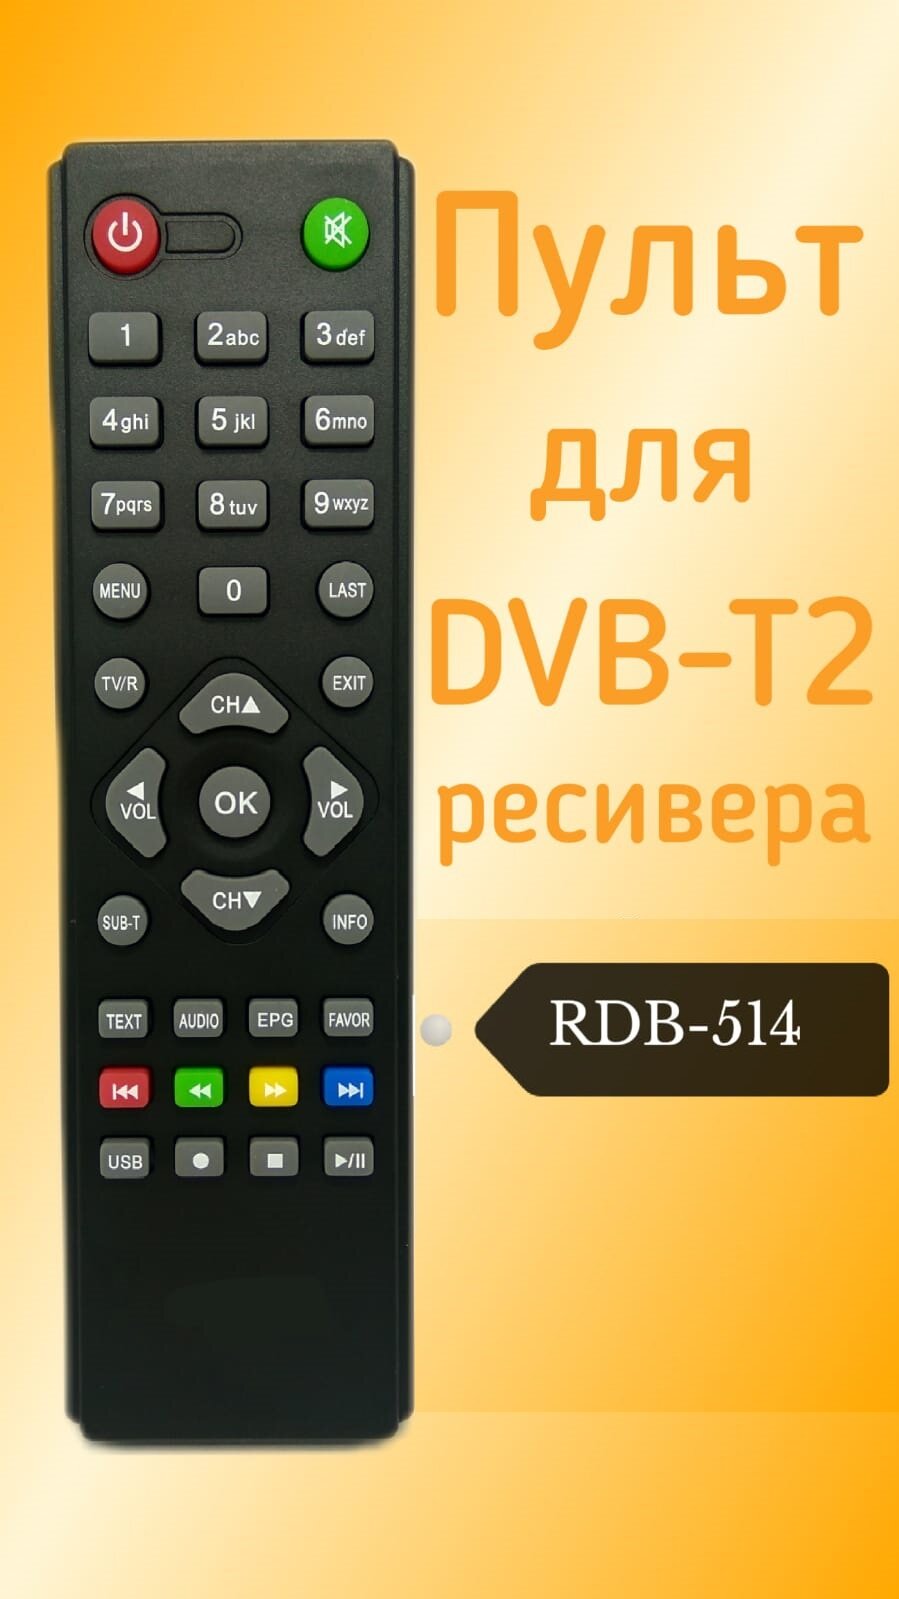 Пульт для DVB-T2-ресивера Rolsen RDB-514